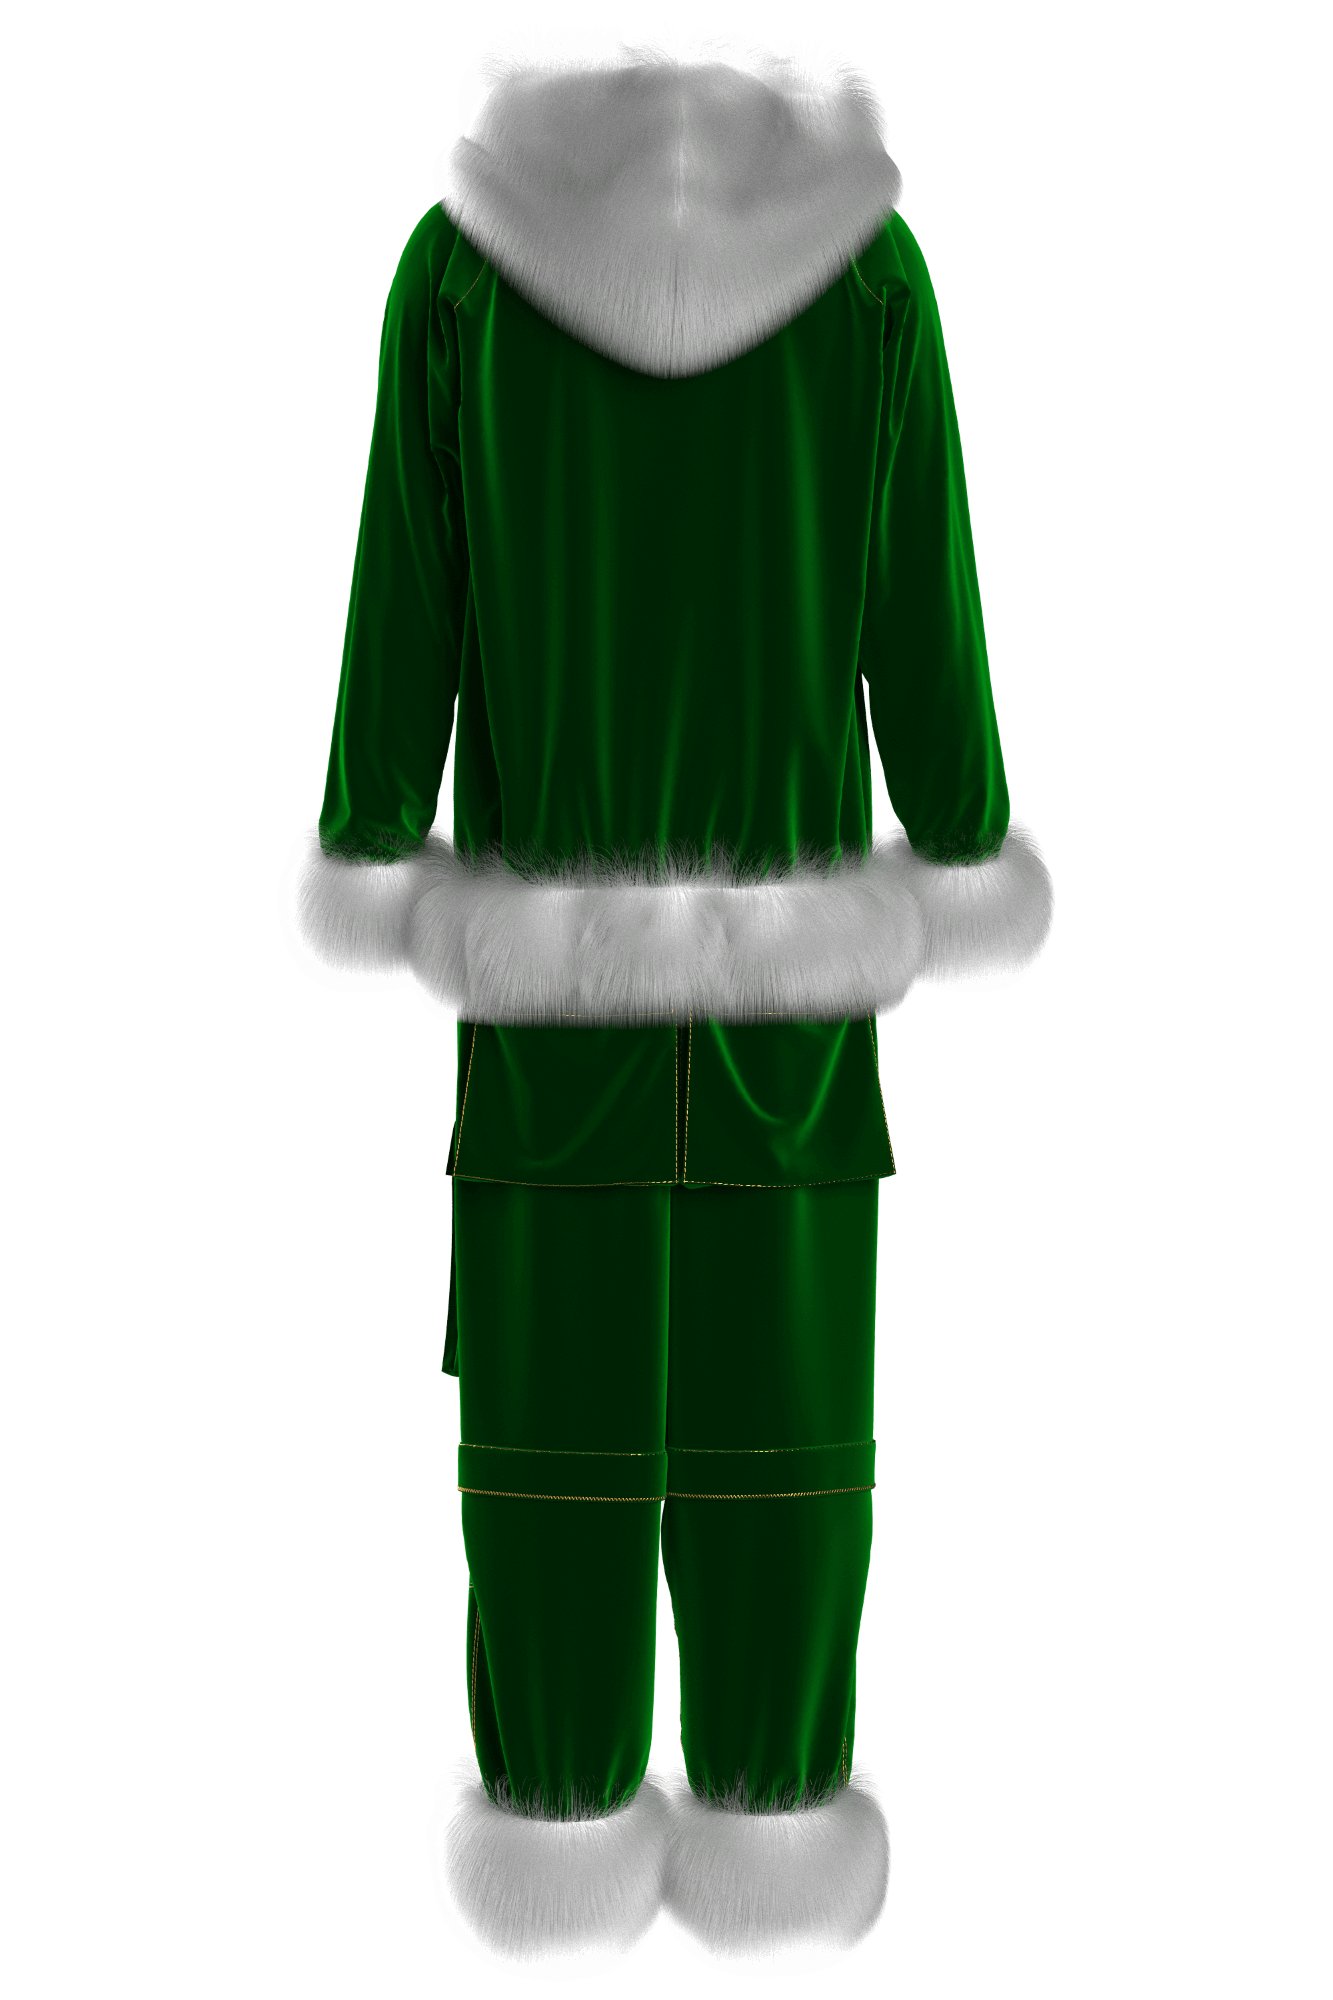  | Santa Claus outfit